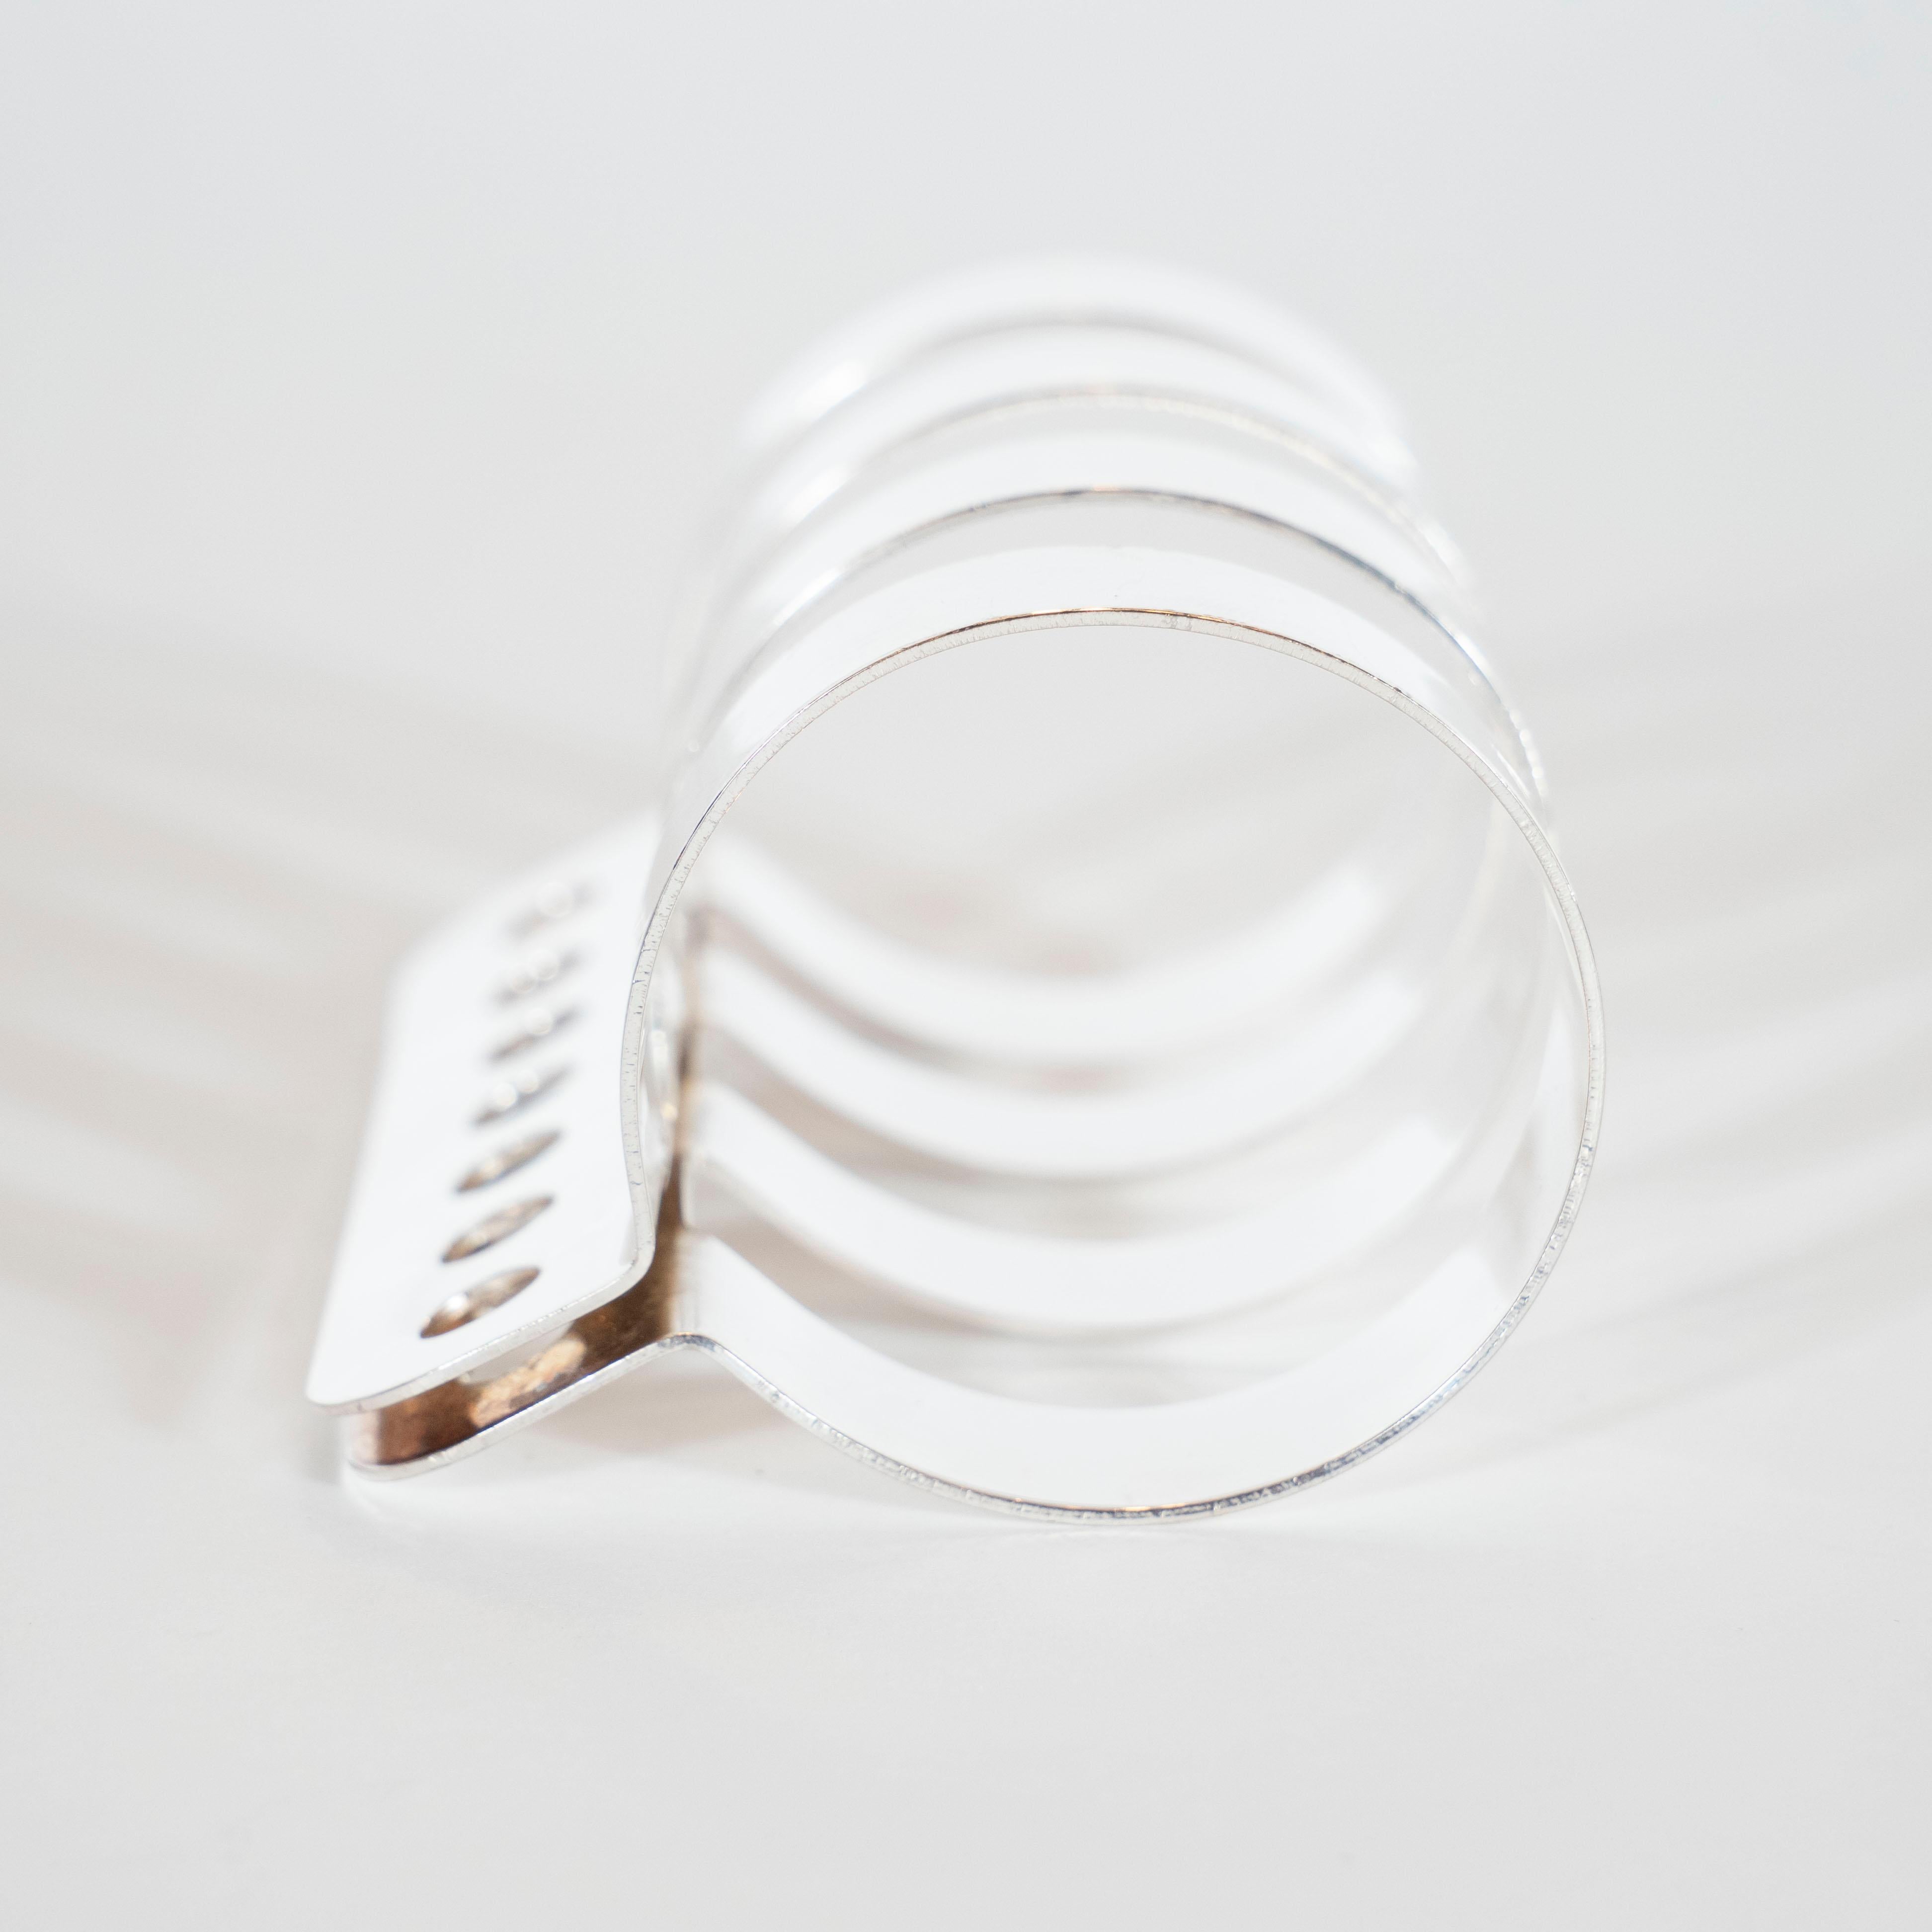 Post-Modern Modernist Memphis Silverplate Napkin Rings by Nathalie du Pasquier for Bodum